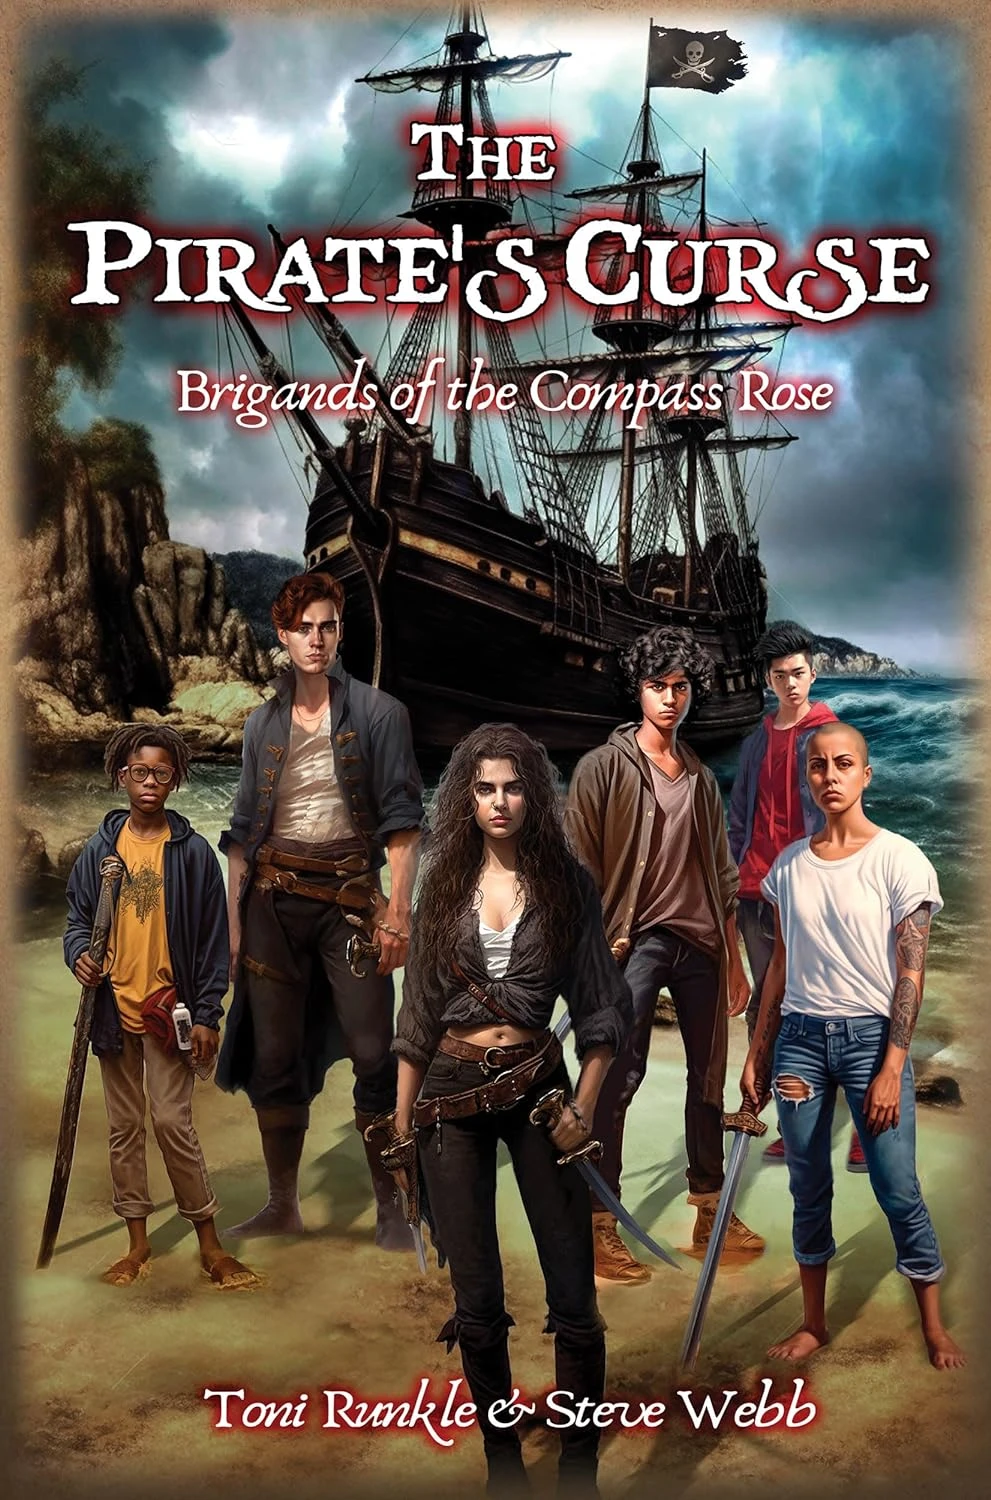 The Pirate’s Curse